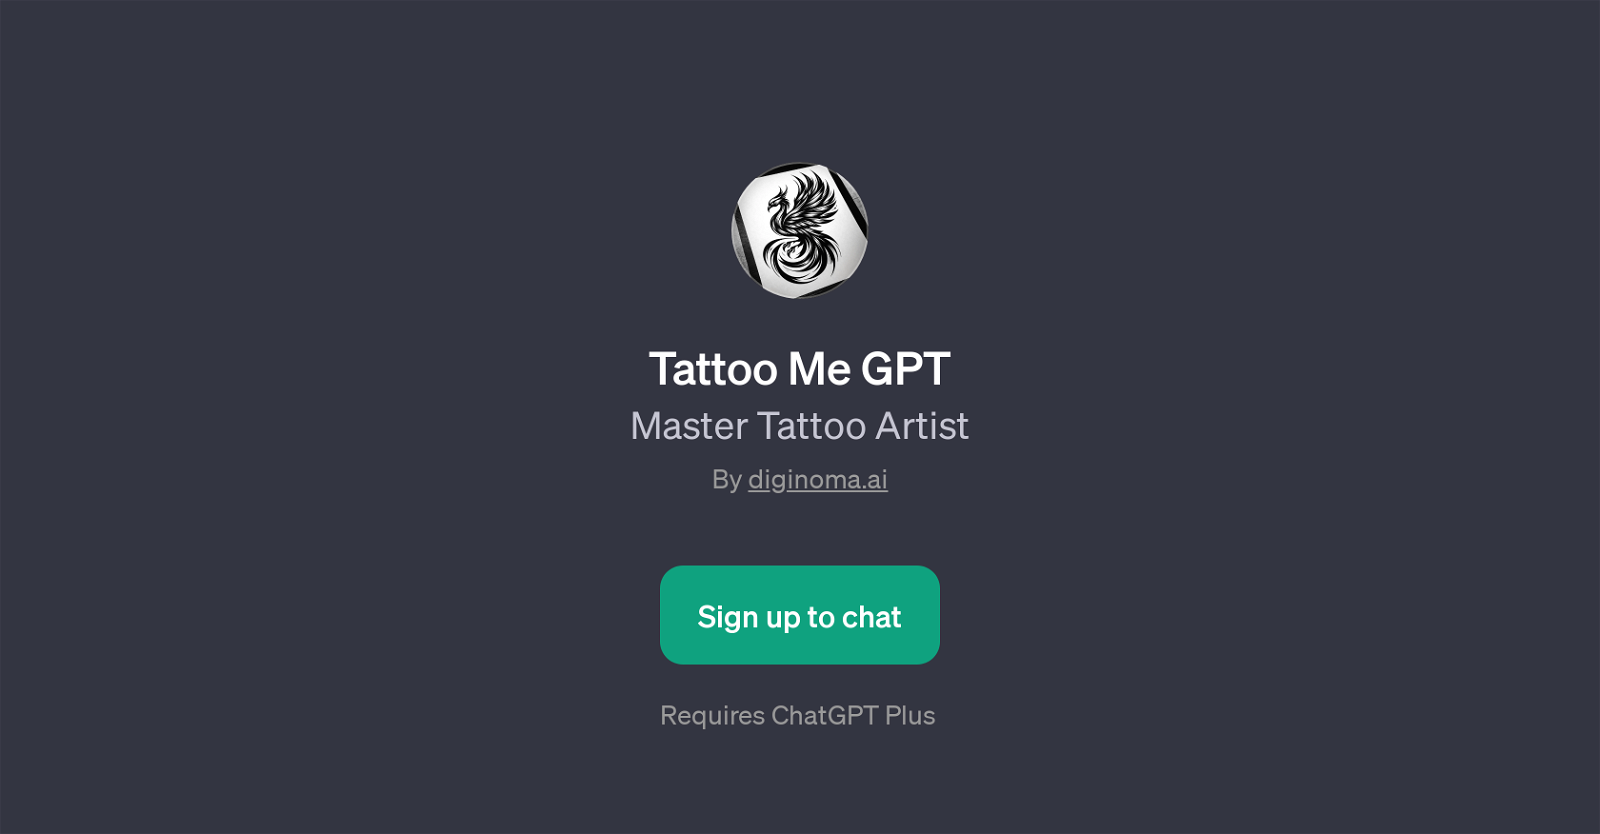 Tattoo Me GPT website